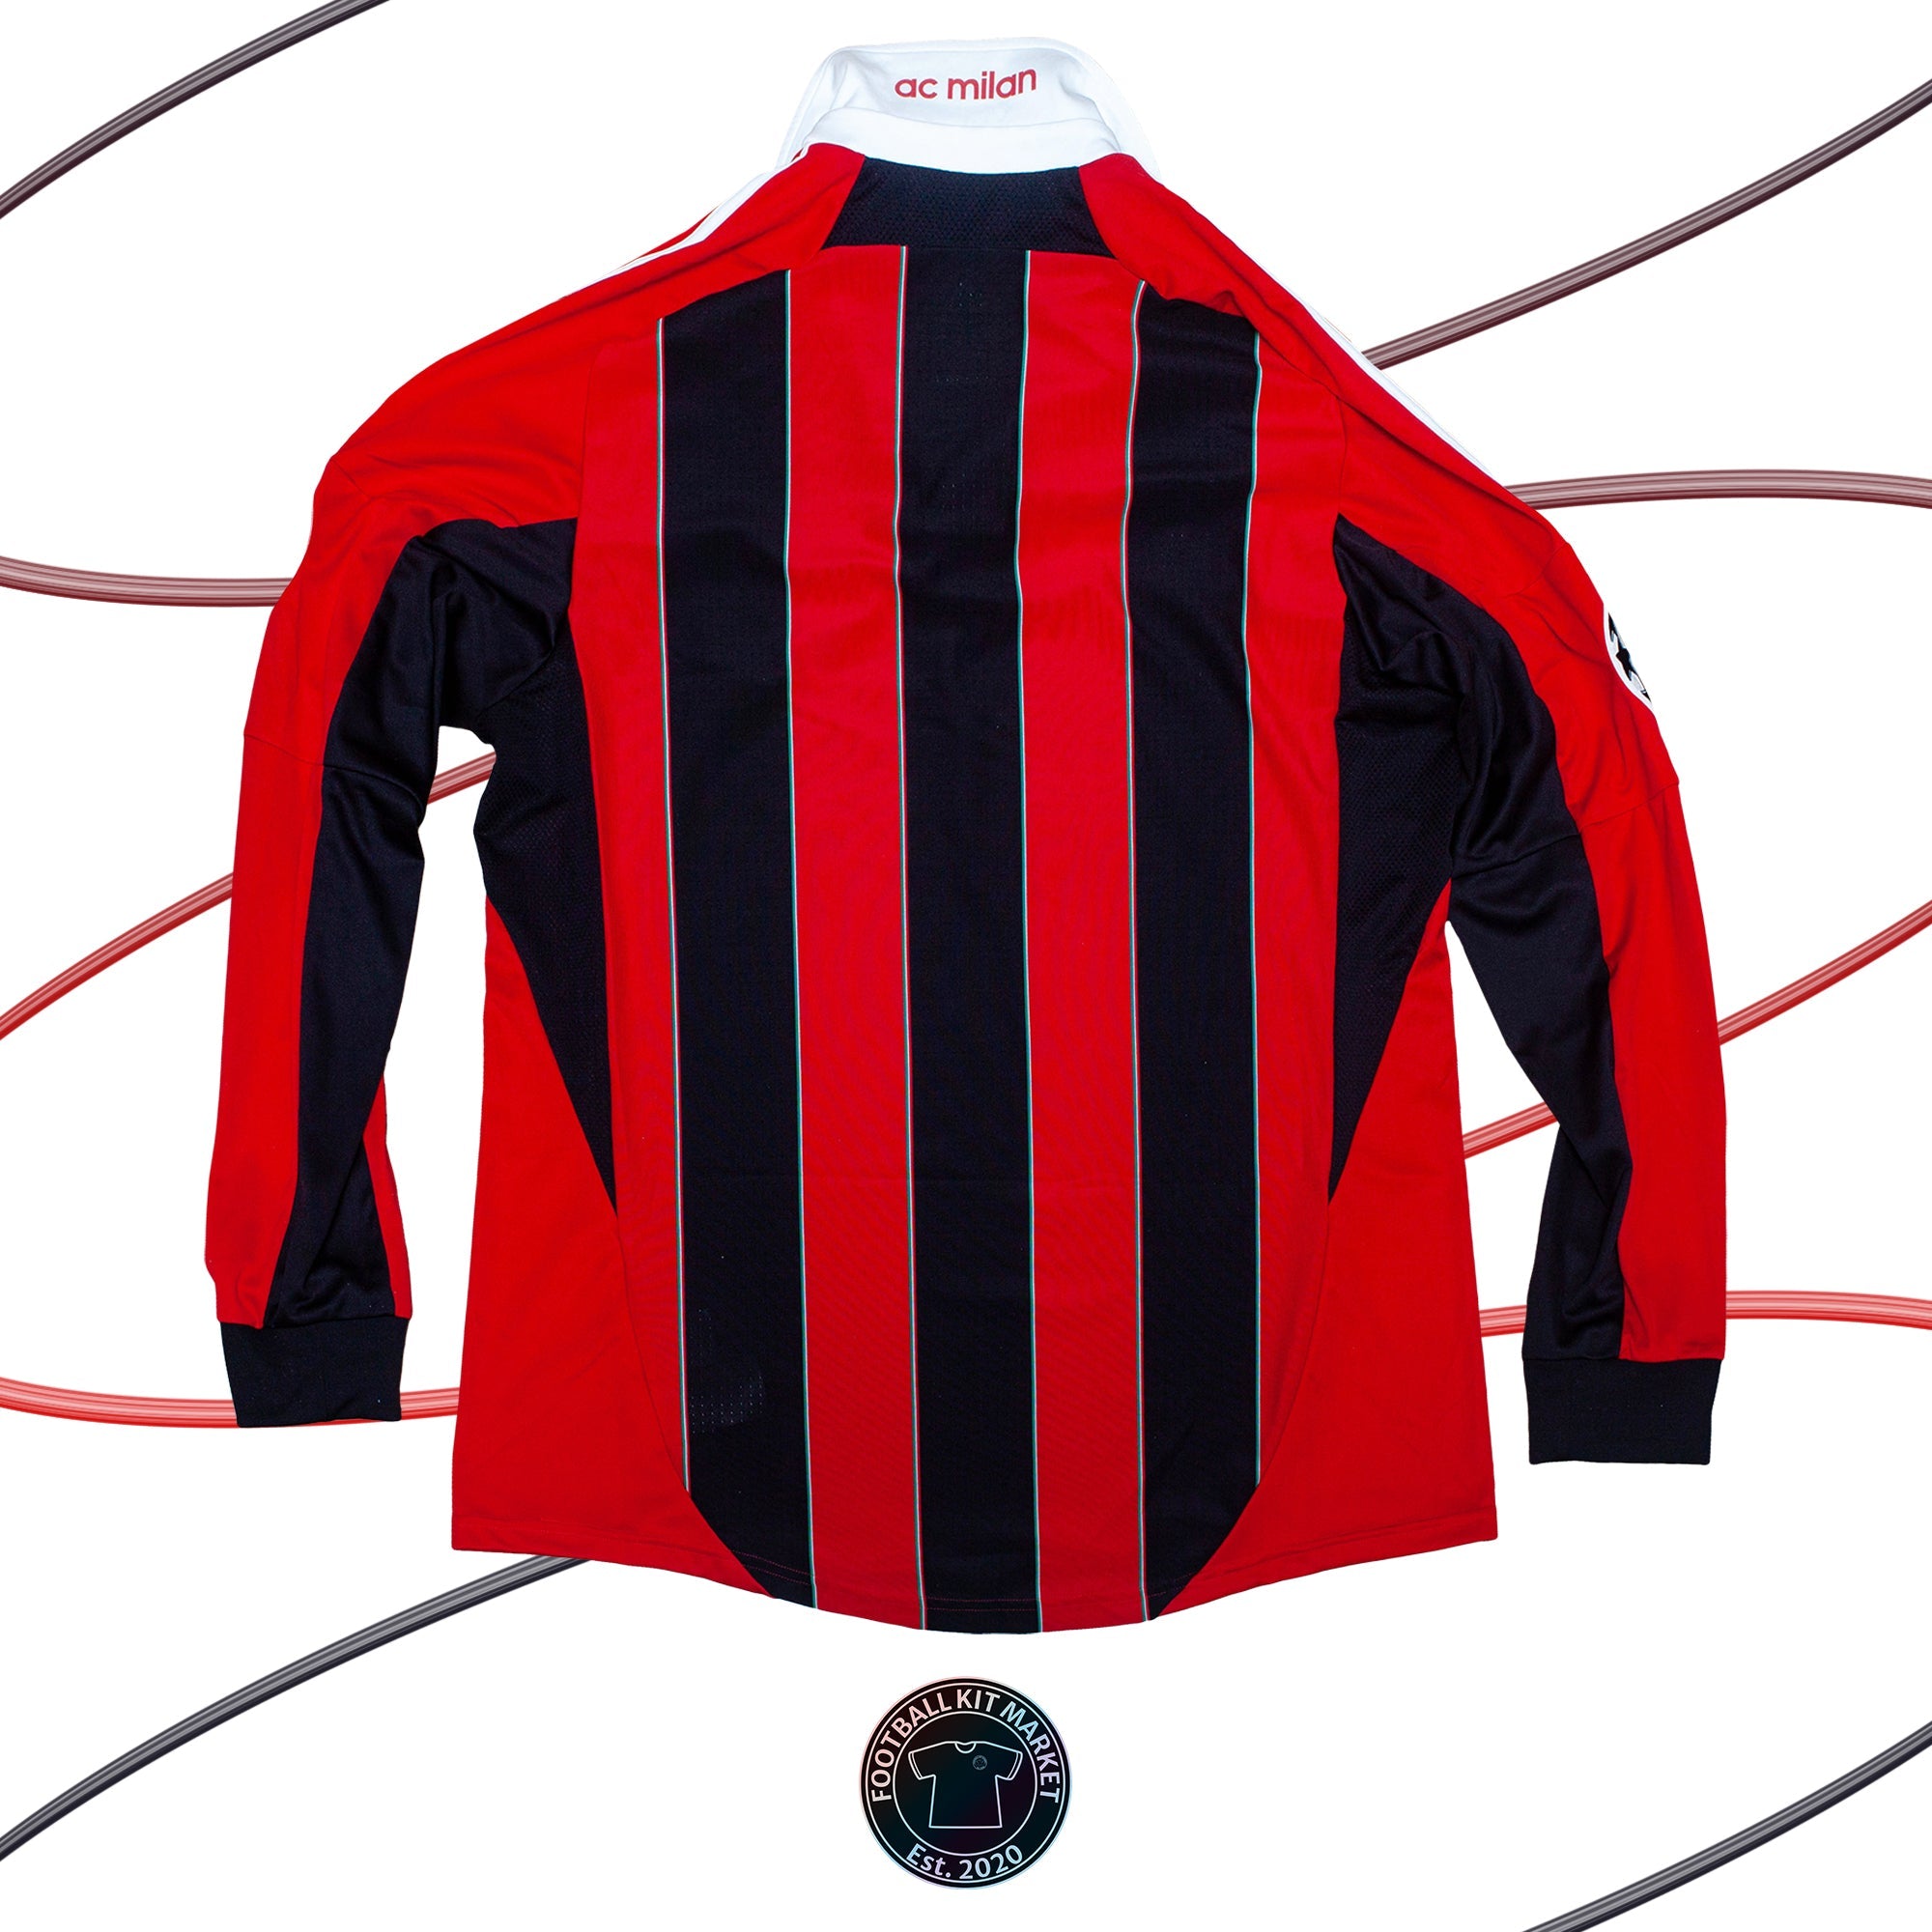 Genuine AC MILAN Home Shirt (2012-2013) - ADIDAS (XL) - Product Image from Football Kit Market